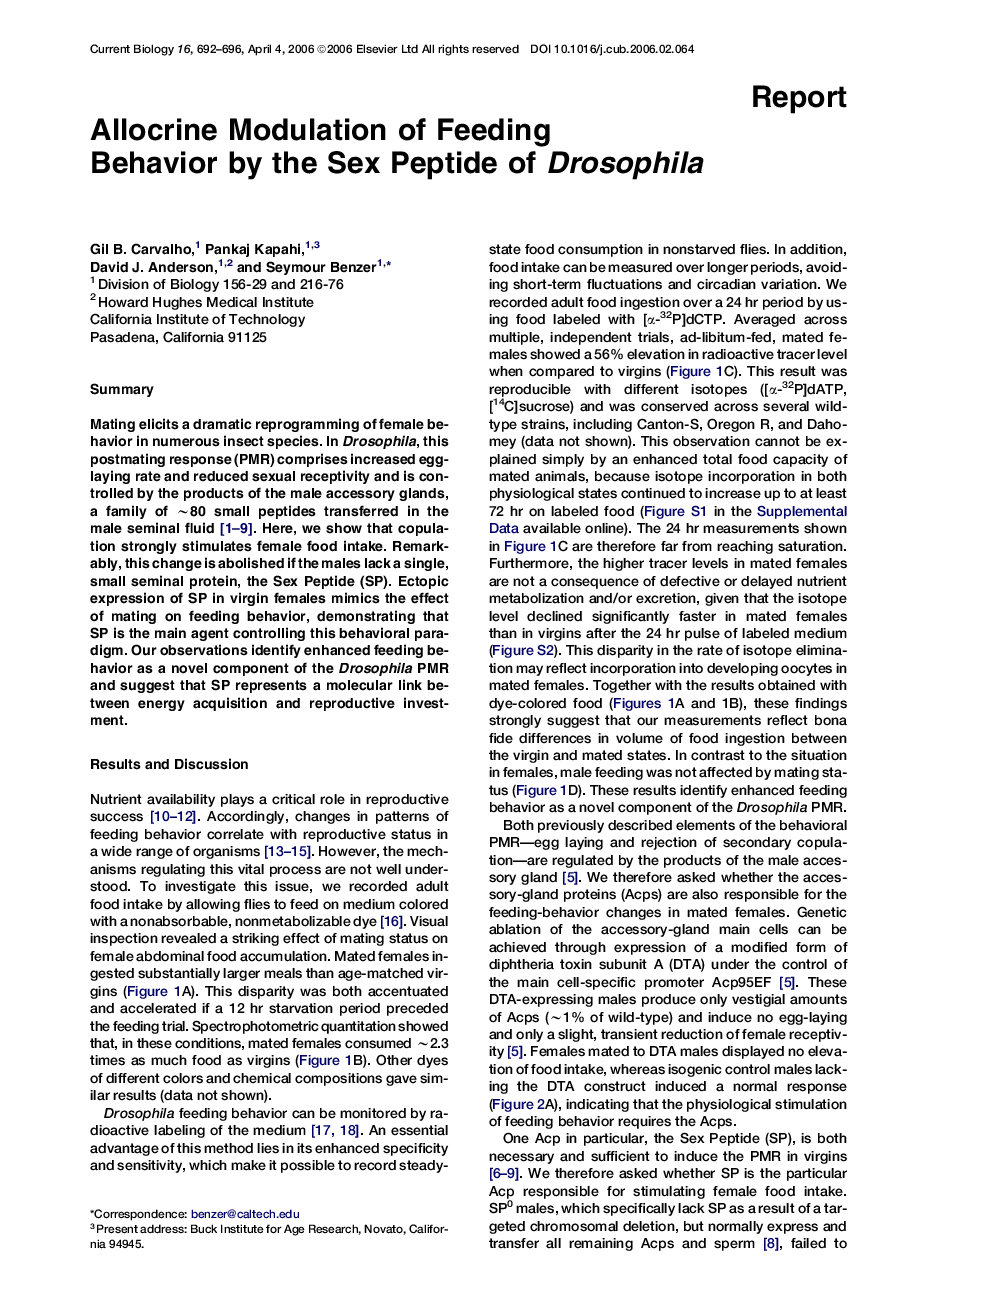 Allocrine Modulation of Feeding Behavior by the Sex Peptide of Drosophila